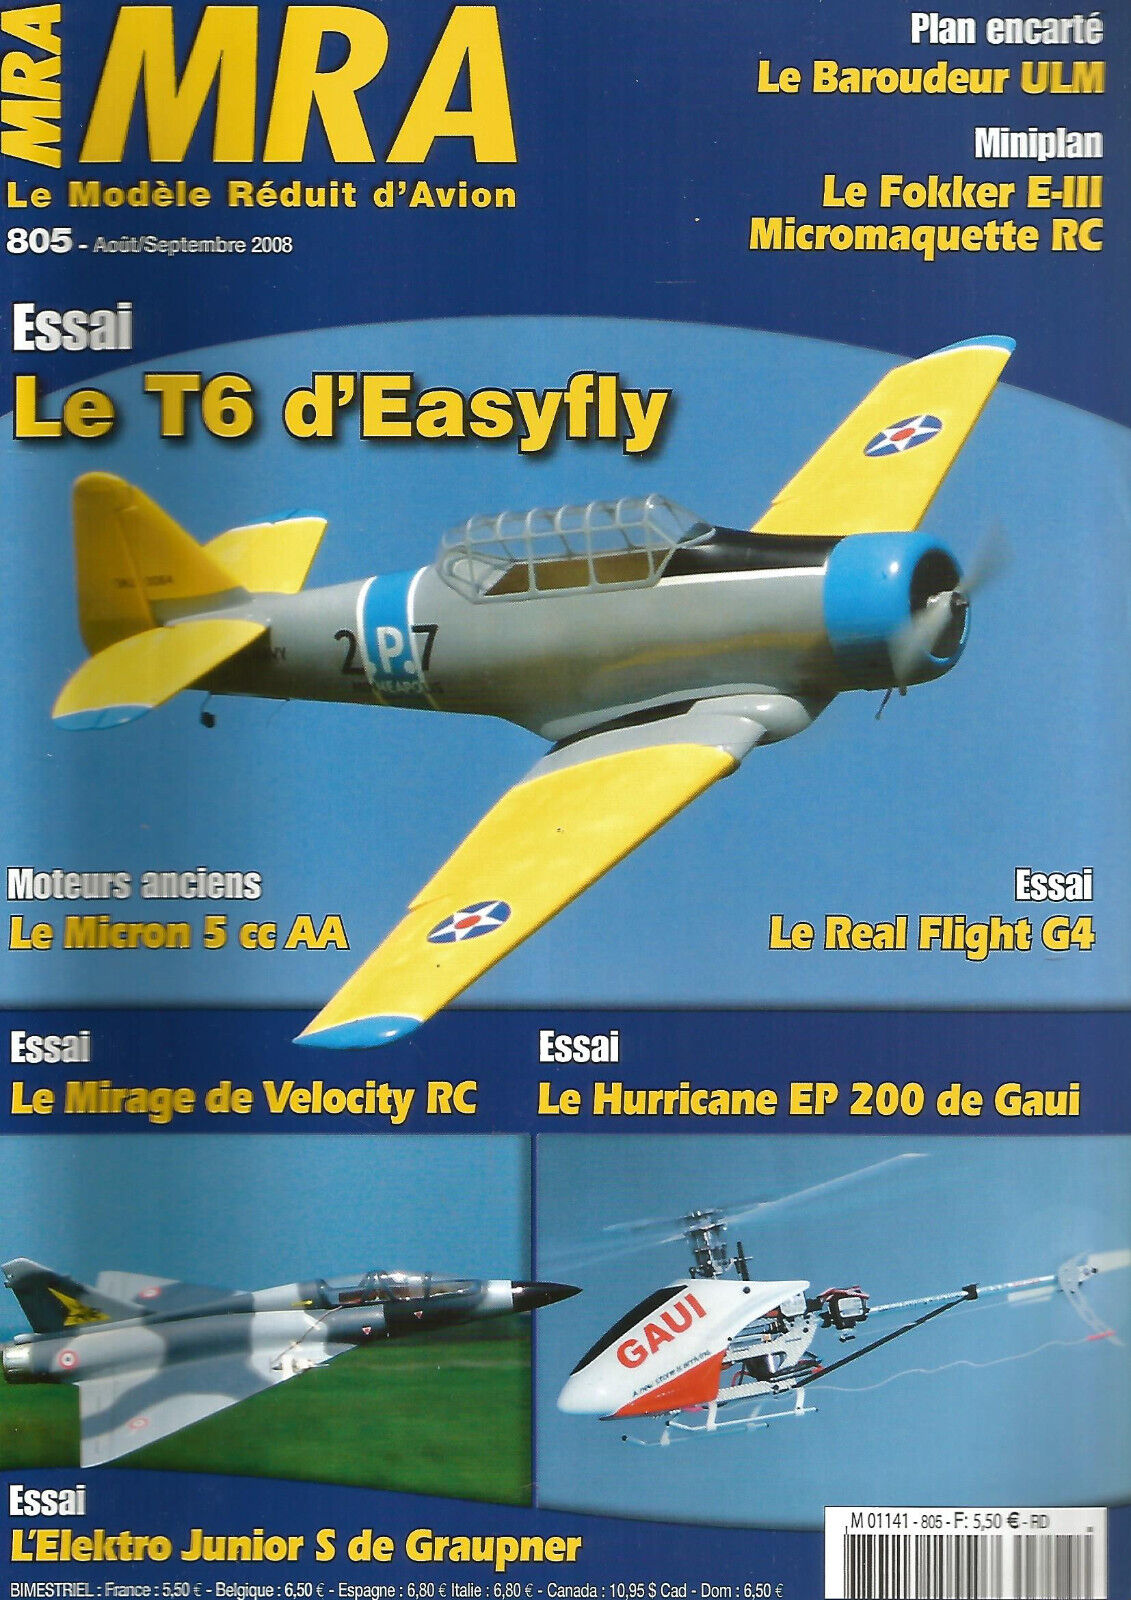 Mra no. 805 plan "the brawler ulm"/t6/micron easyfly 5 cc AA/hurricane ep